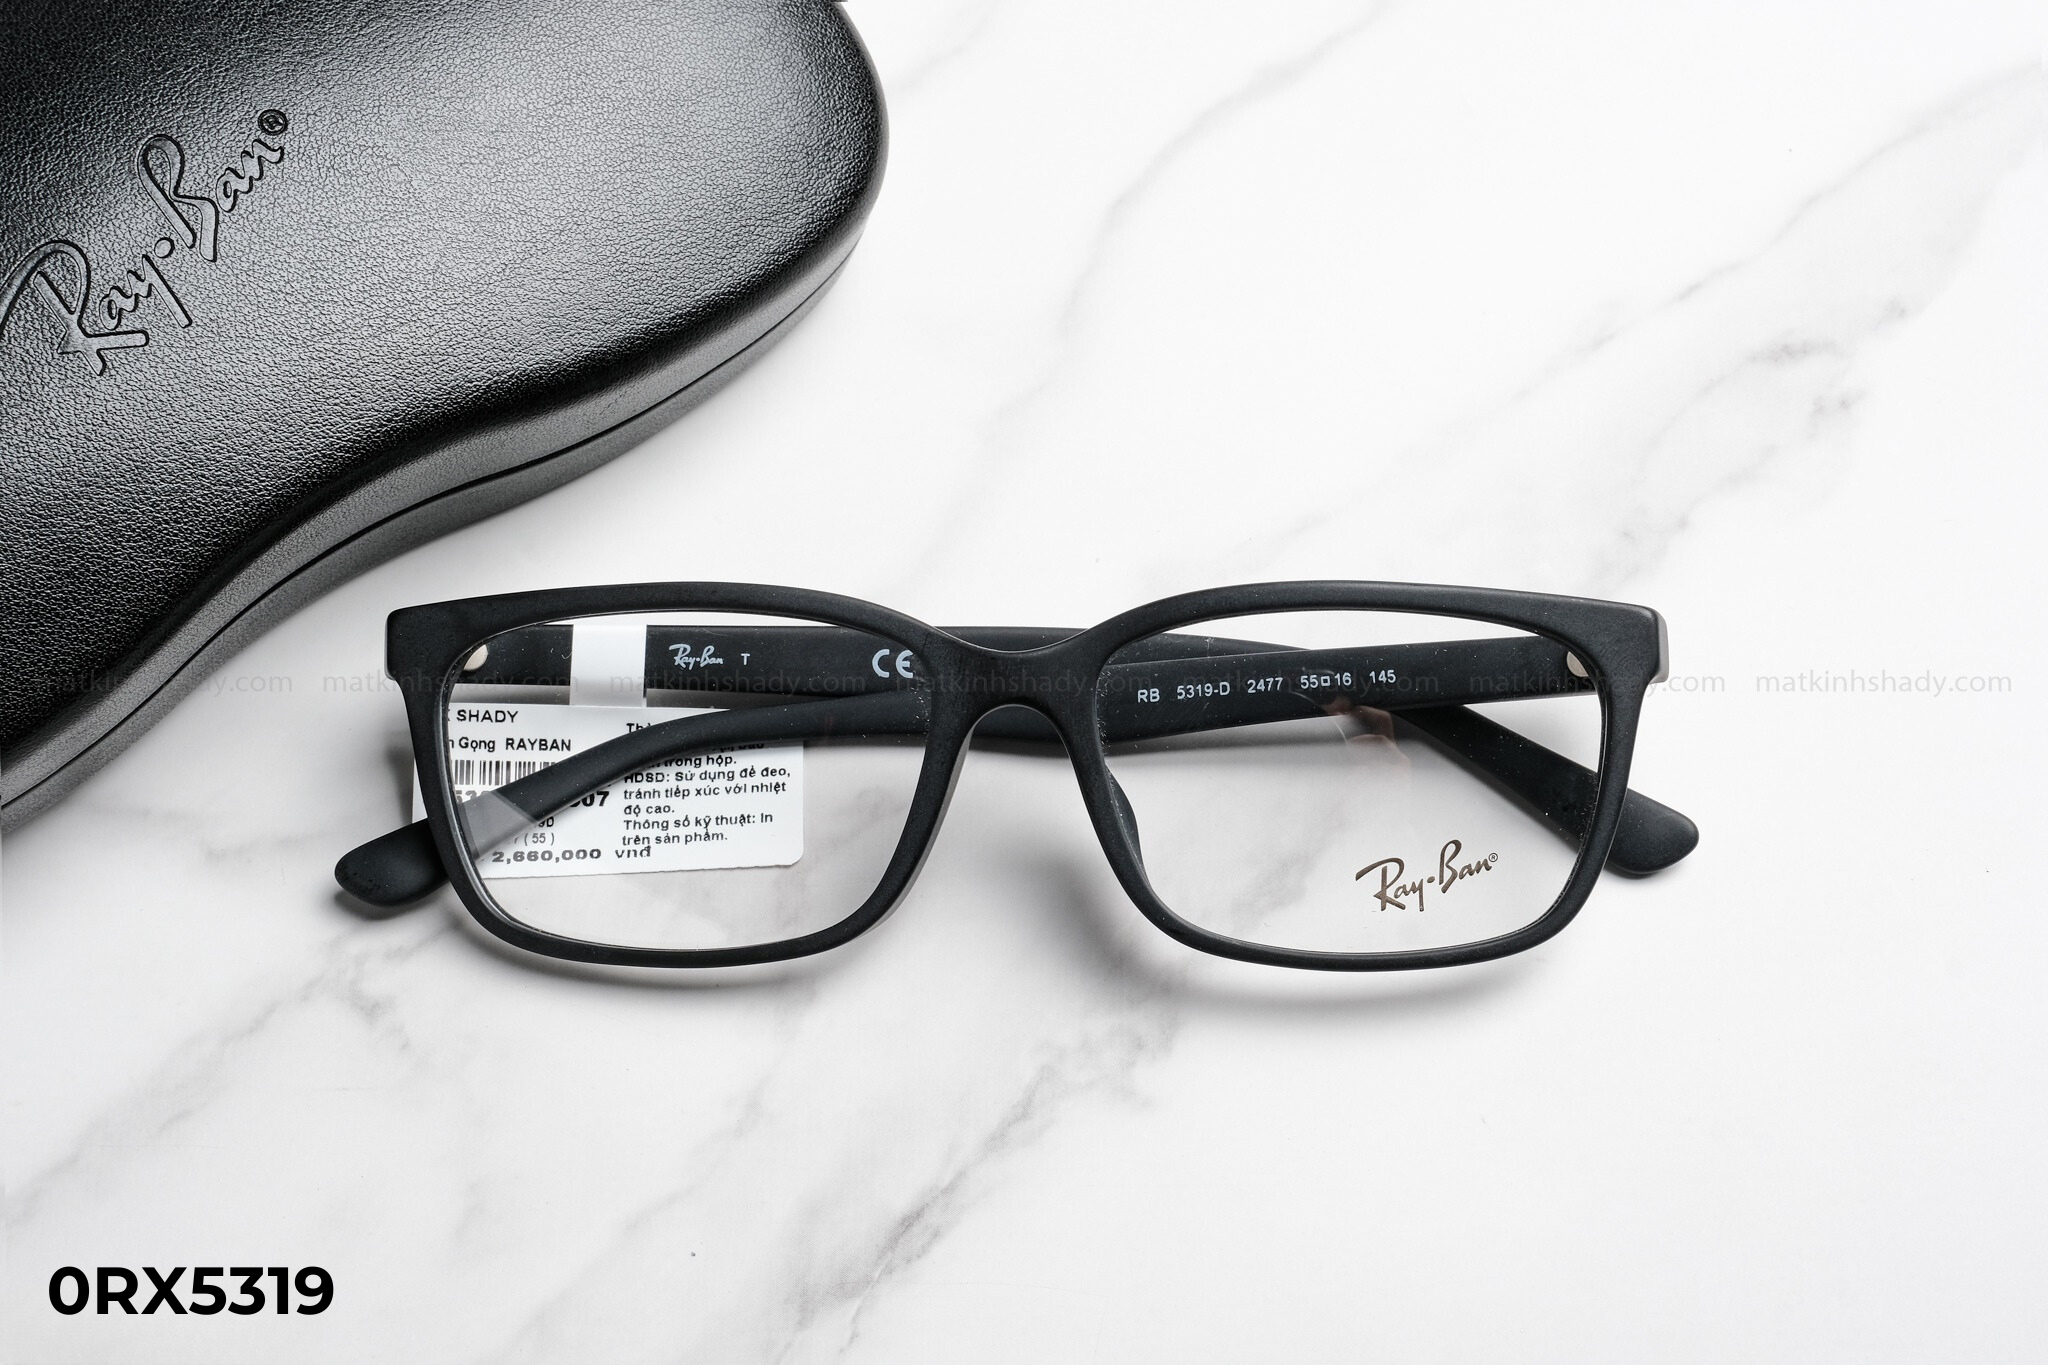  Rayban Eyewear - Glasses - 0RX5319 